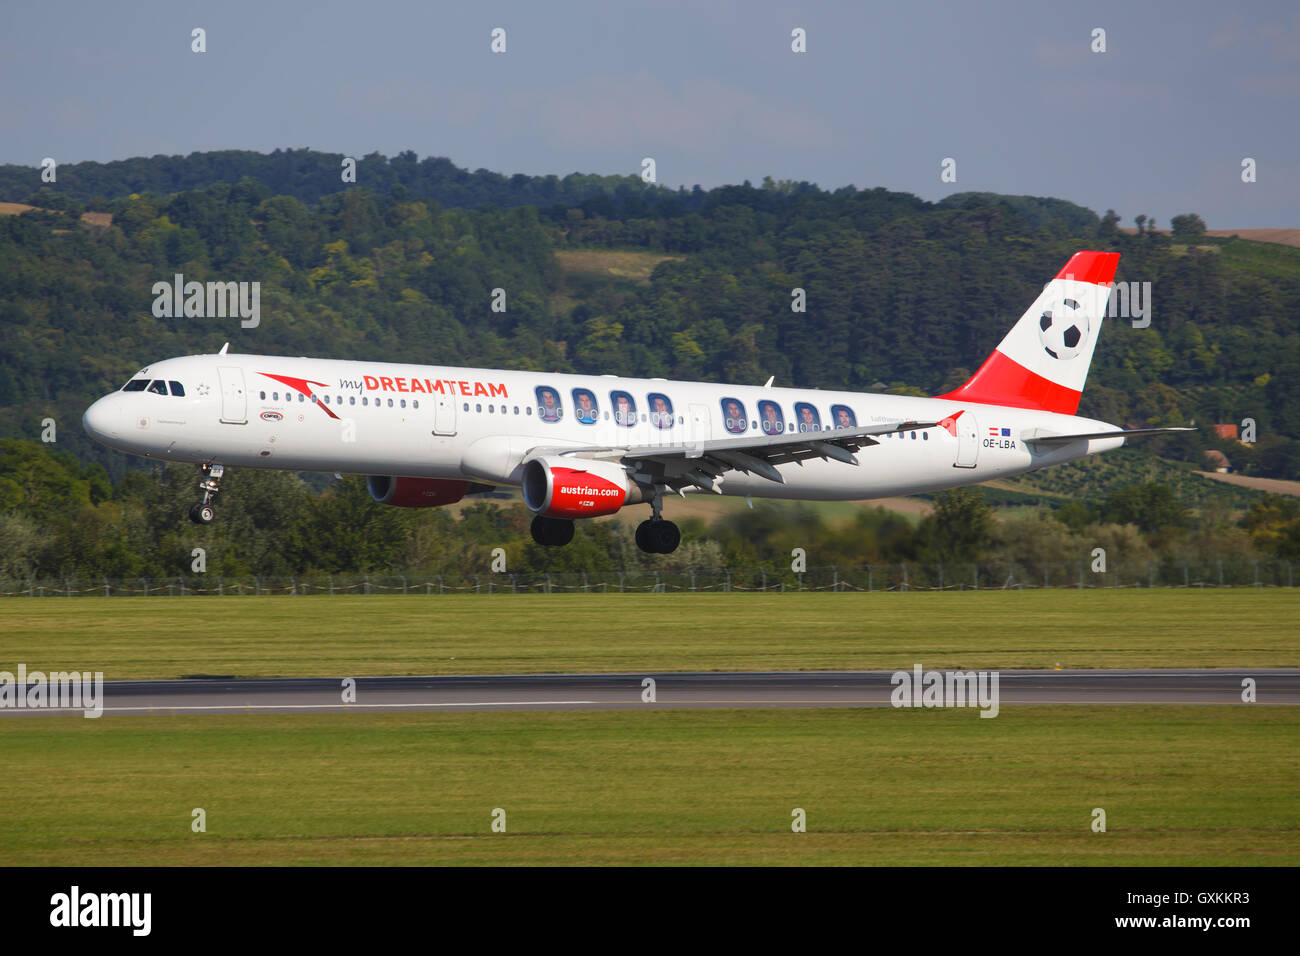 Wien/Austria August 9, 2016: Airbus A320 from Austrian landing at Wien Airport. Stock Photo